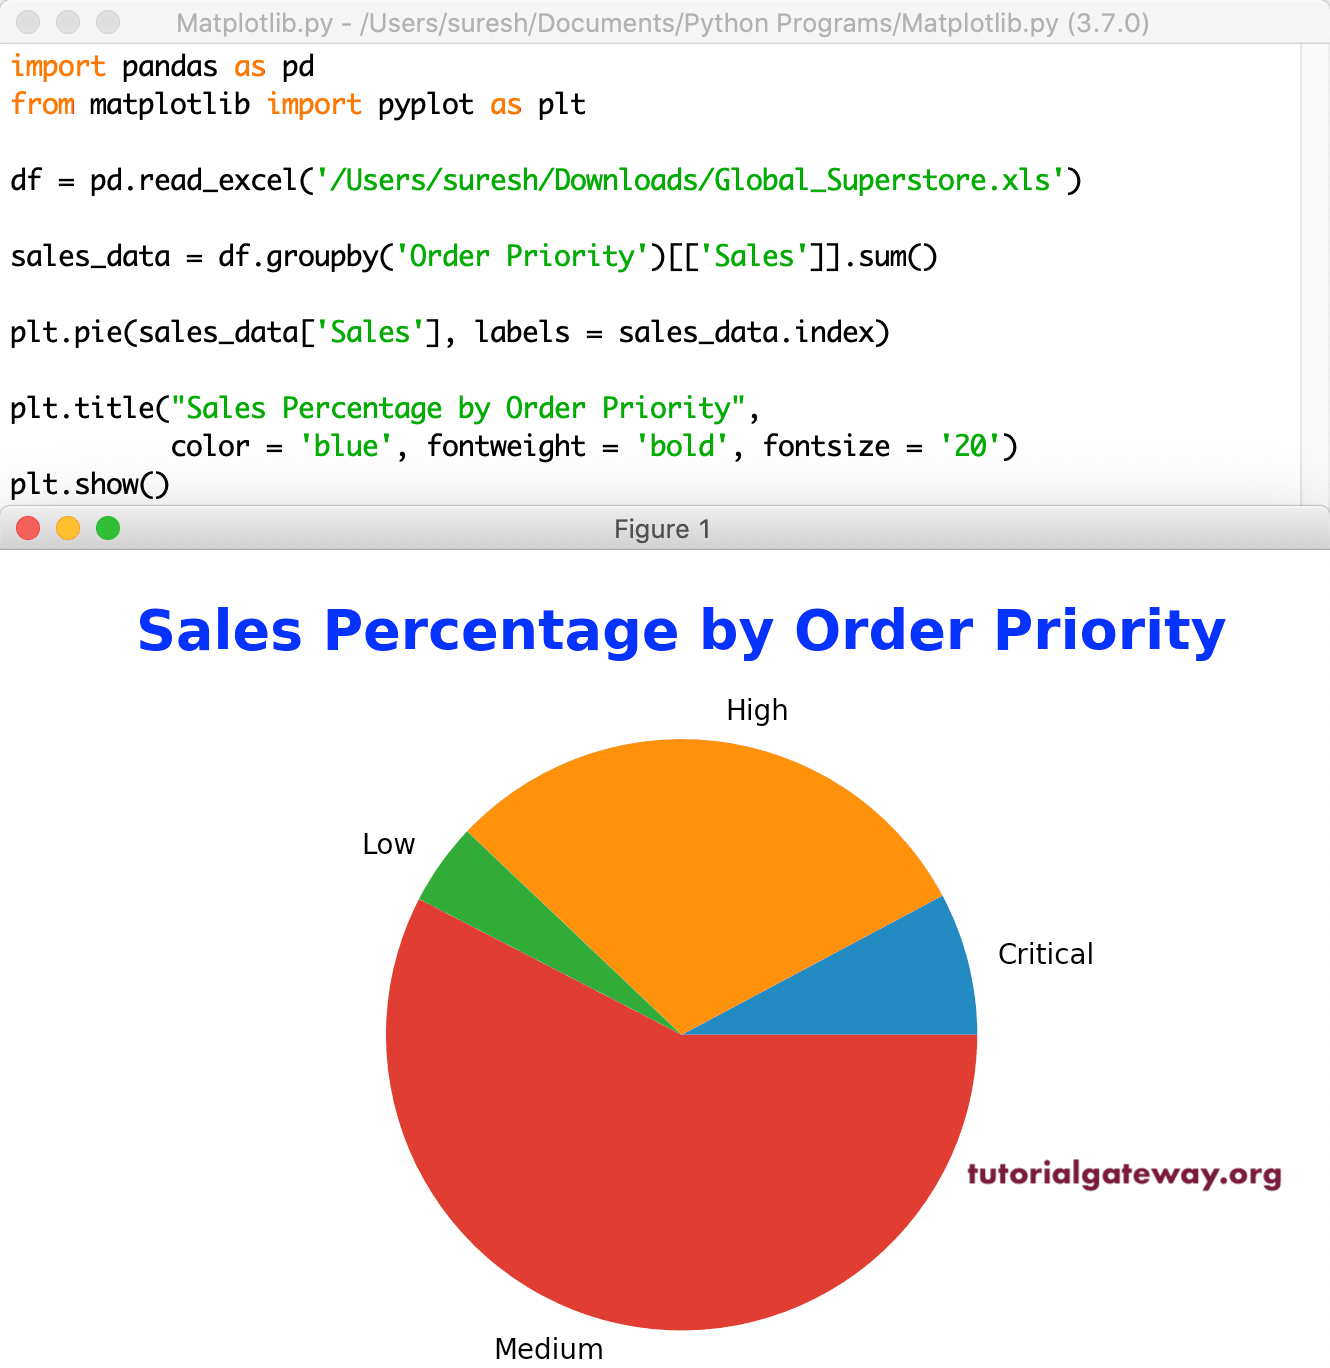 Python Matplotlib Pie Chart